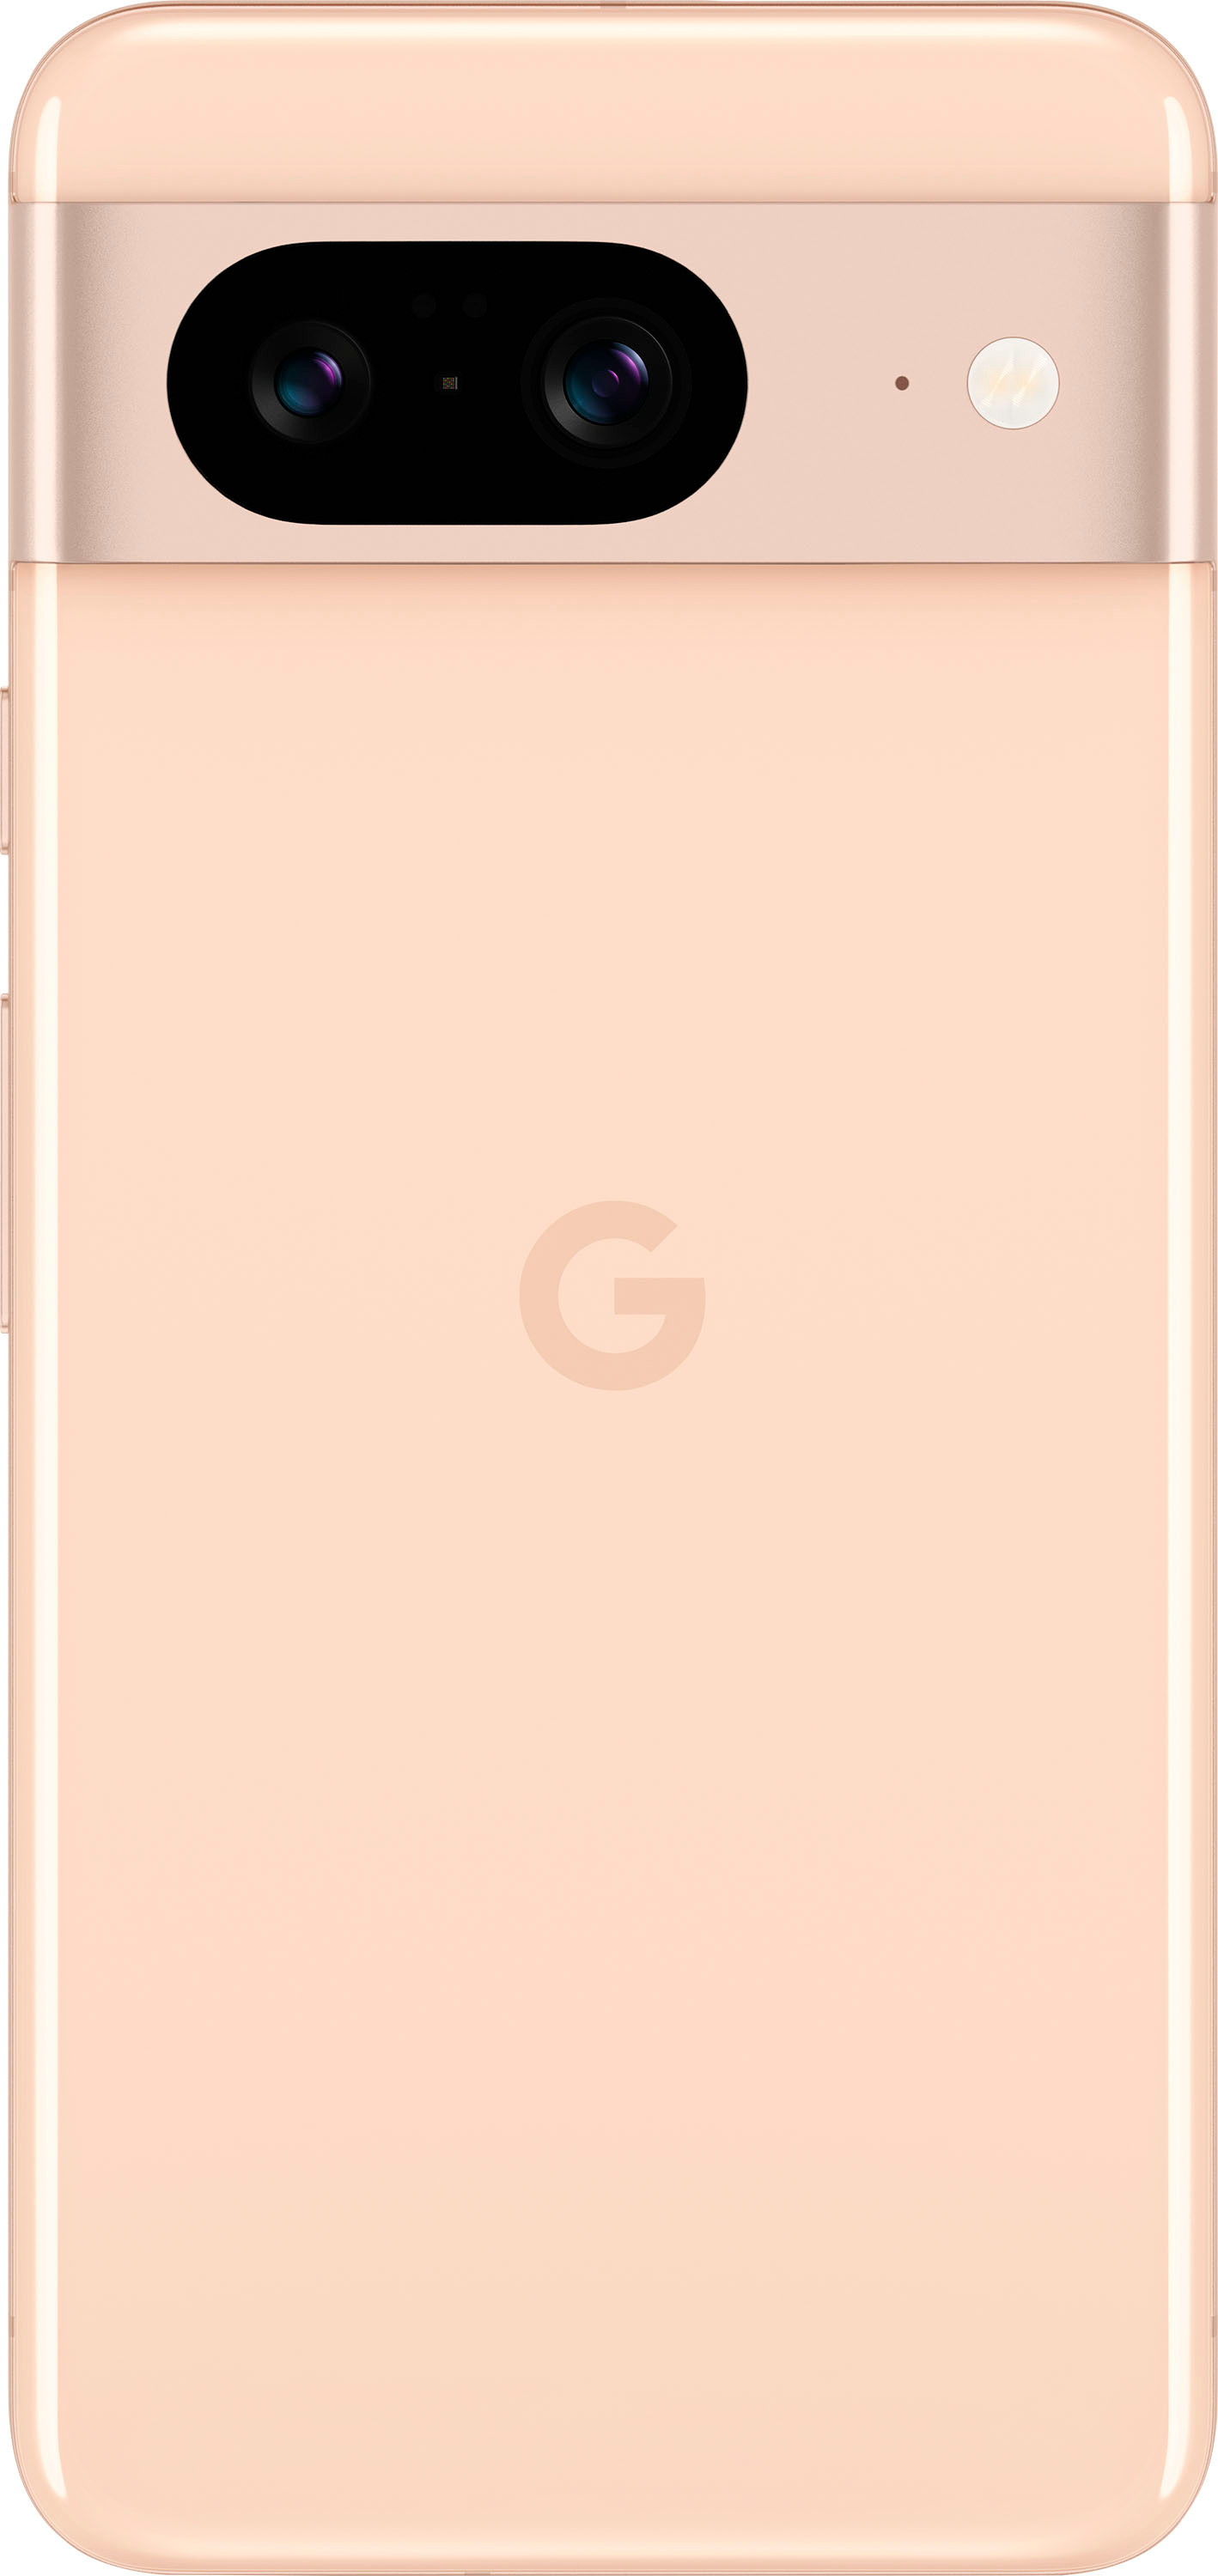 (Unlocked) Pixel Buy GA05000-US - Best 256GB Google Rose 8